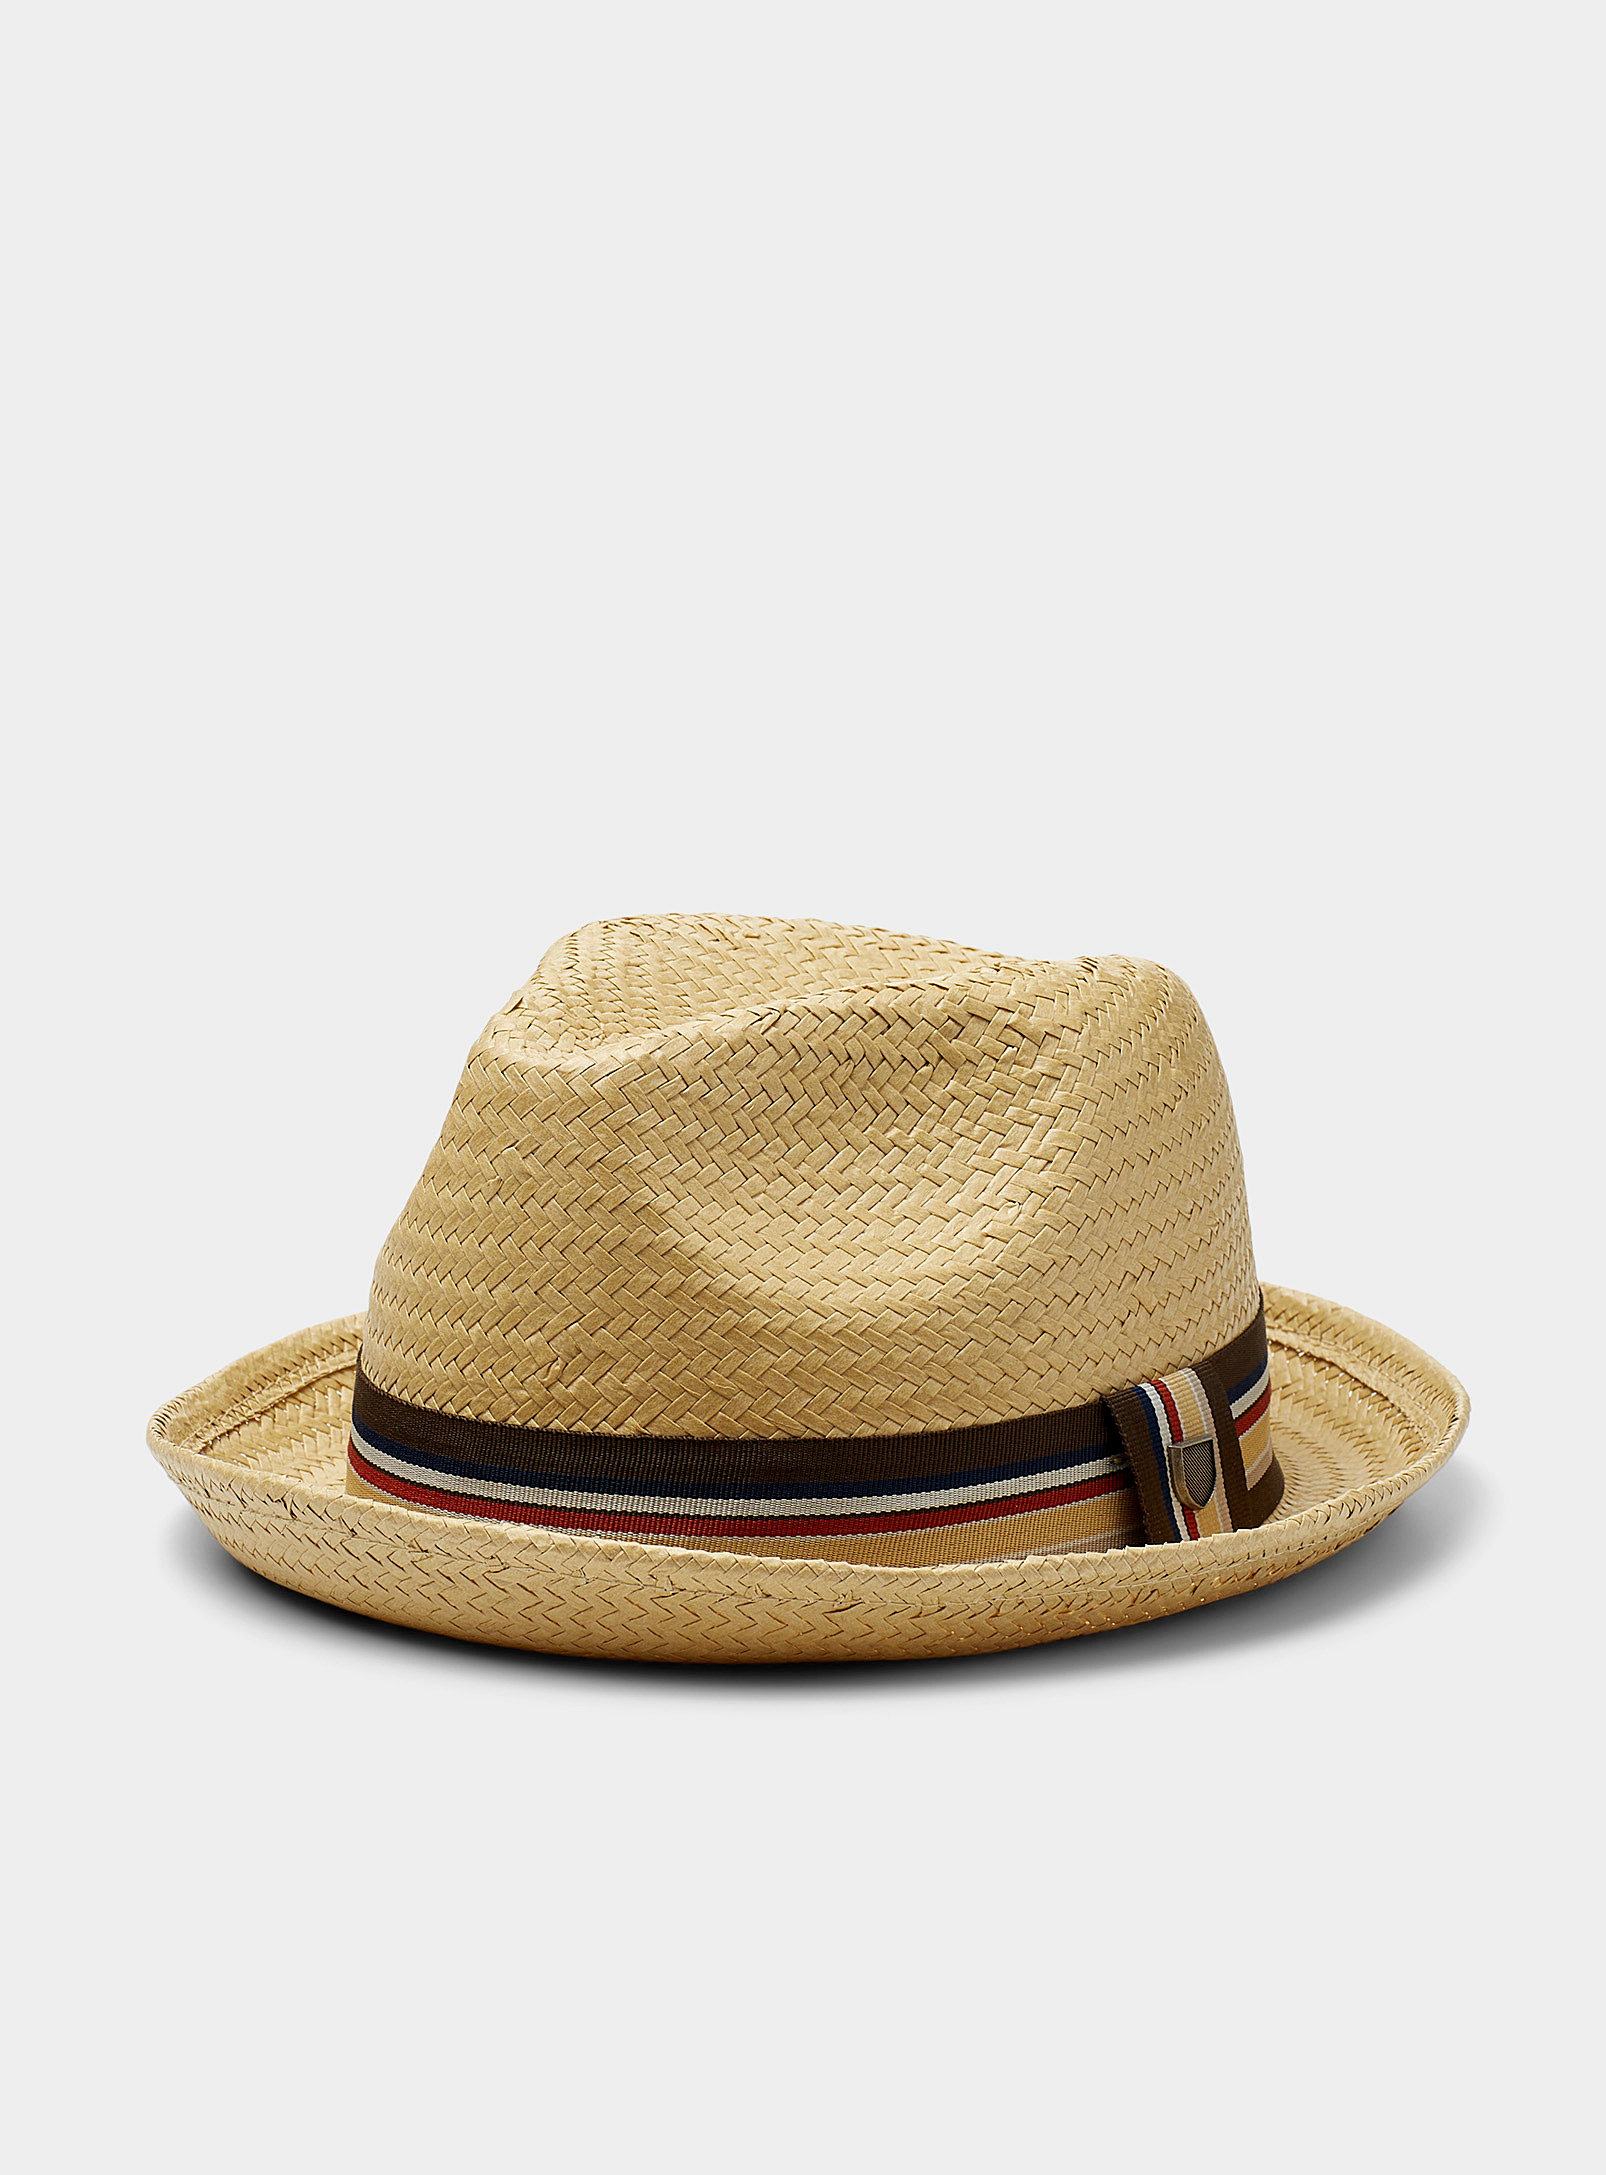 Brixton - Men's Straw Castor player hat